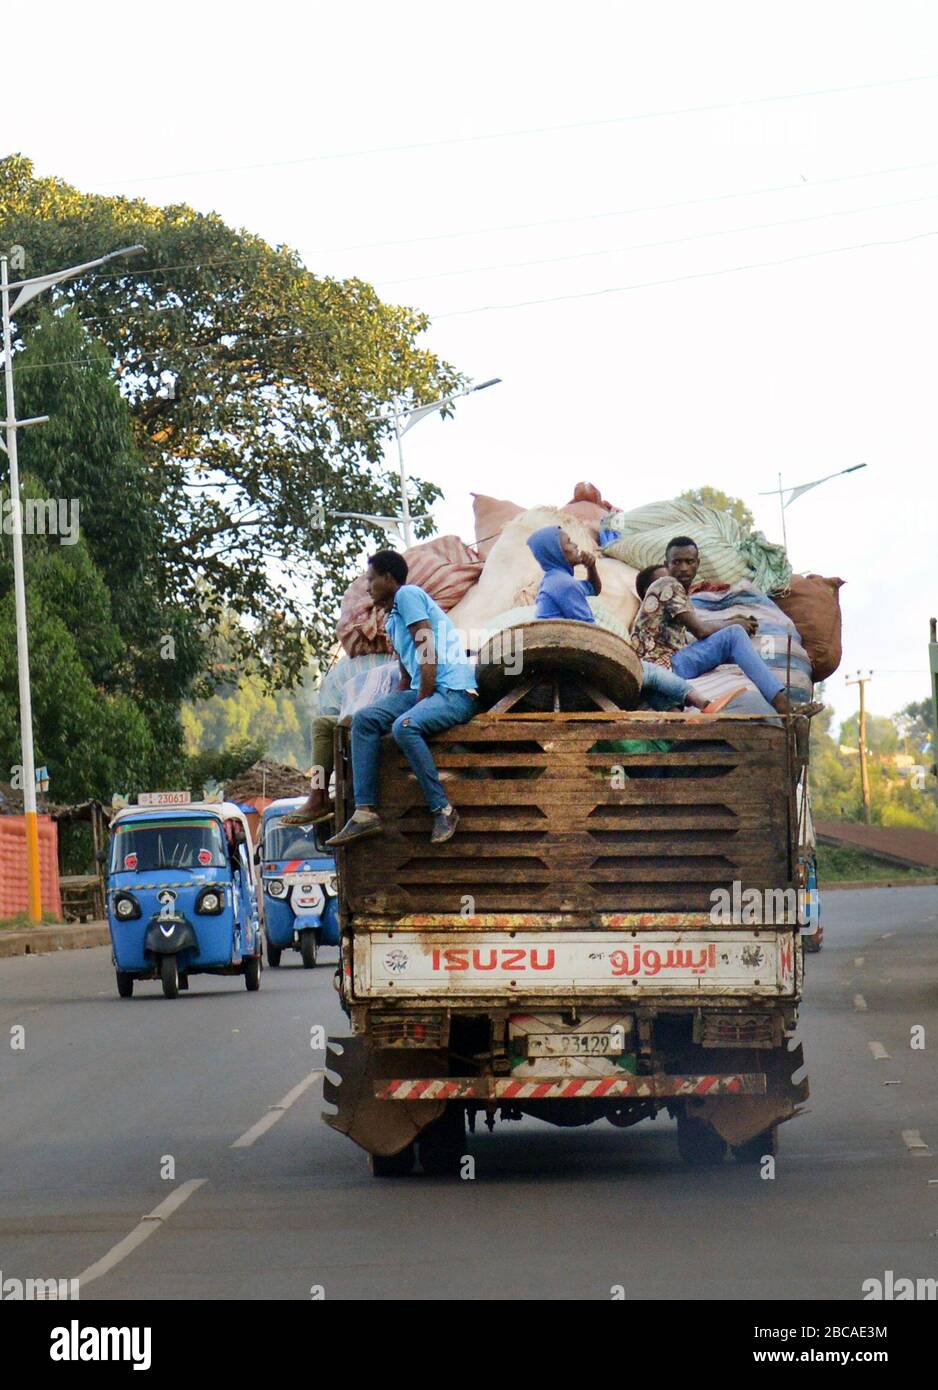 Ethiopian men on the back of an Isuzu truck in Oromia, Ethiopia. Stock Photo